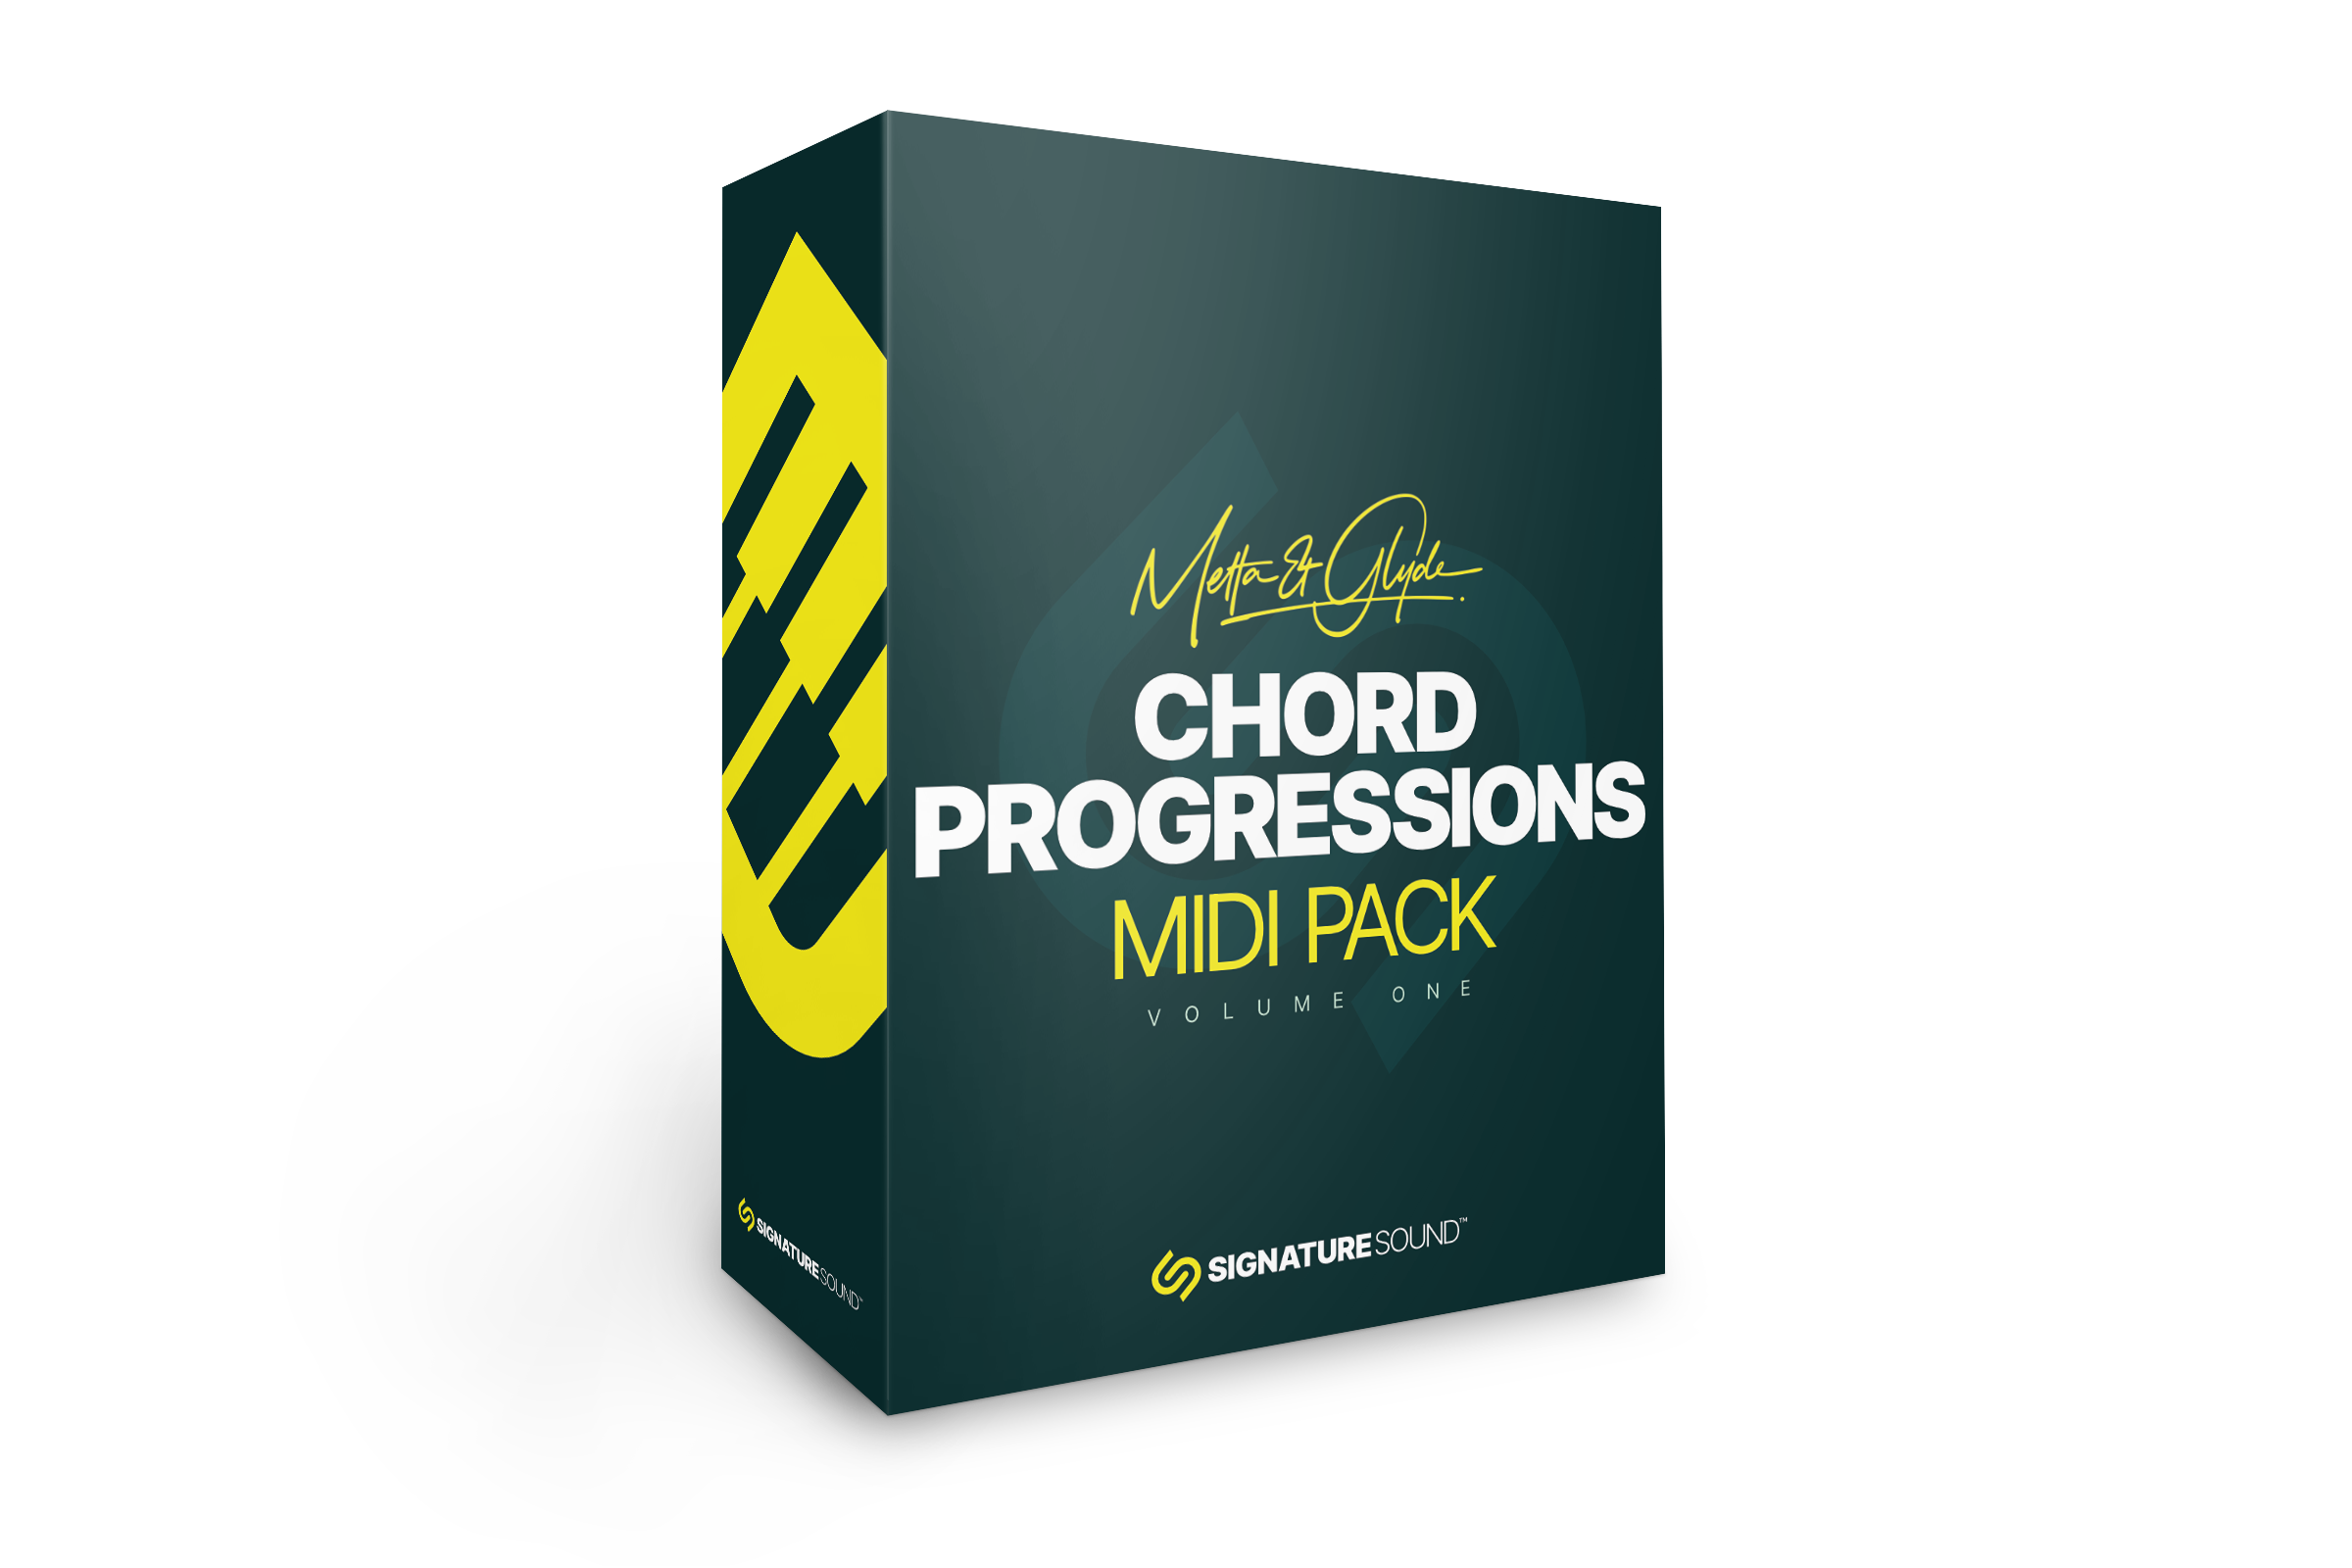 Metta & Glyde Chord Progressions [Midi Pack] Volume One